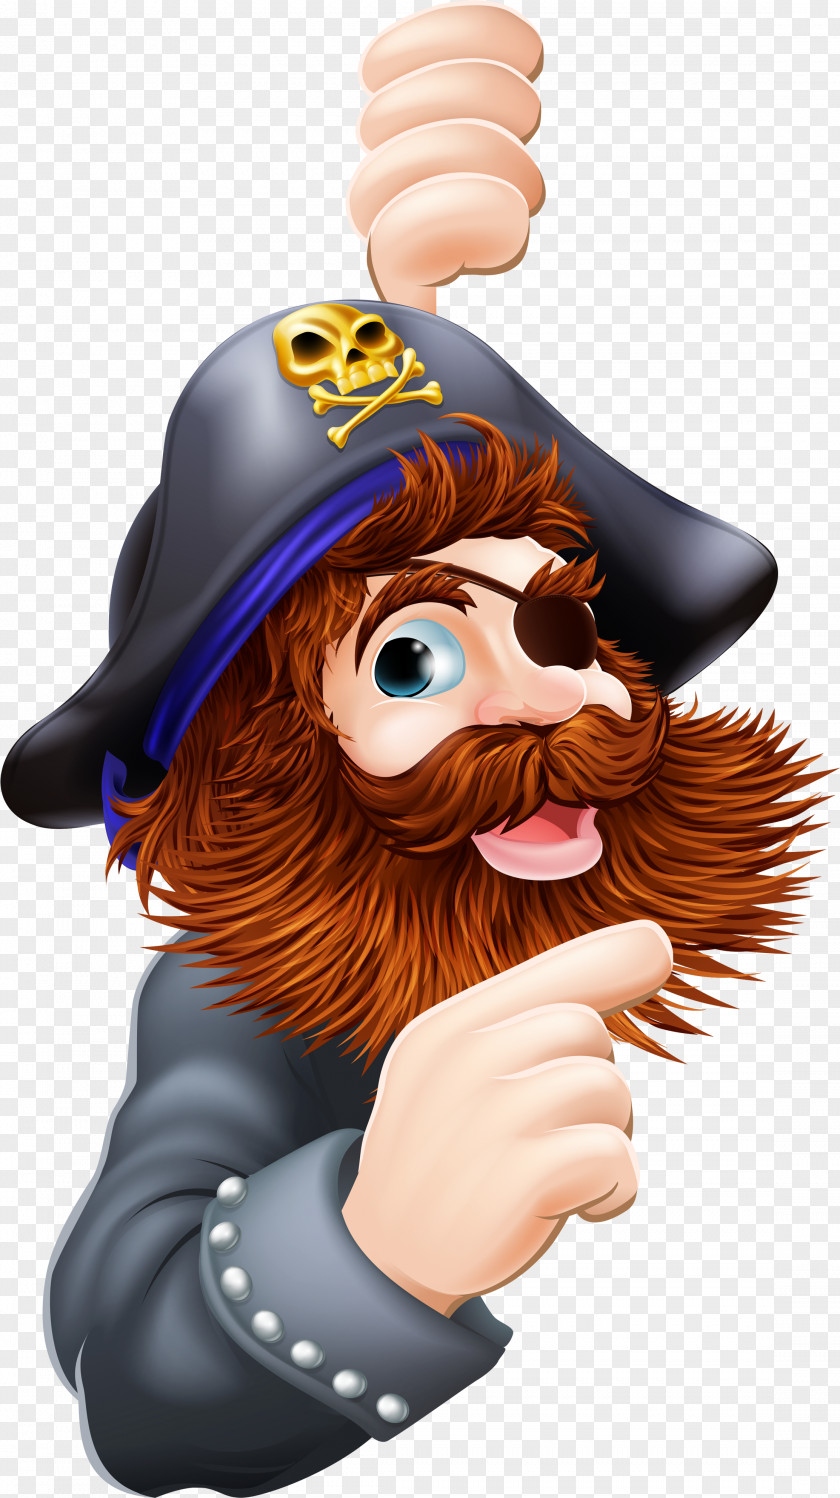 Cartoon Pirates Piracy Royalty-free Stock Photography Illustration PNG